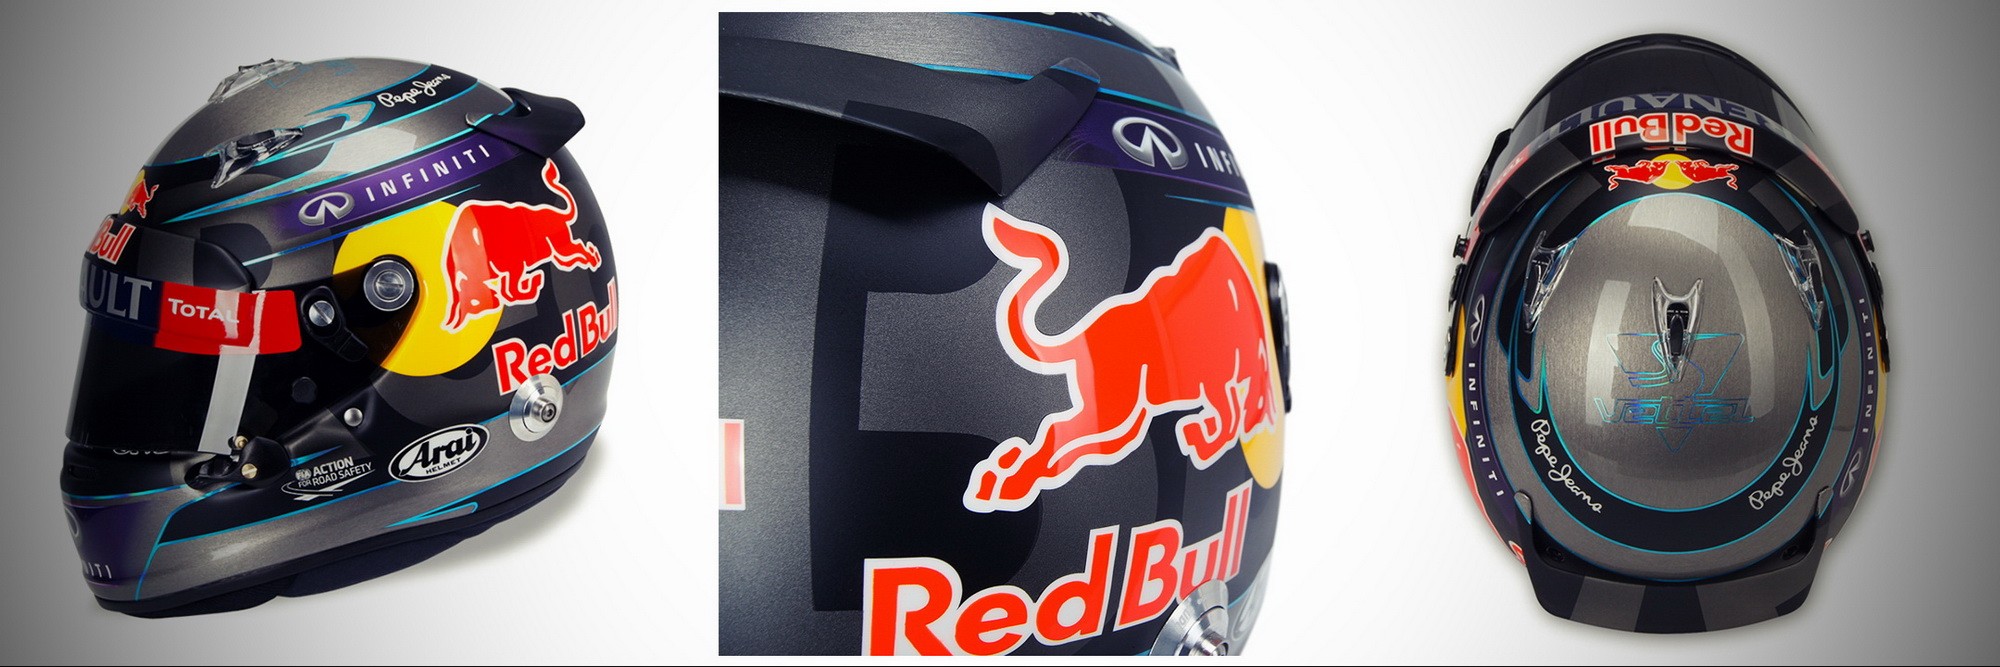 Шлем Себастьяна Феттеля на Гран-При Испании 2013 | 2013 Spanish Grand Prix helmet of Sebastian Vettel